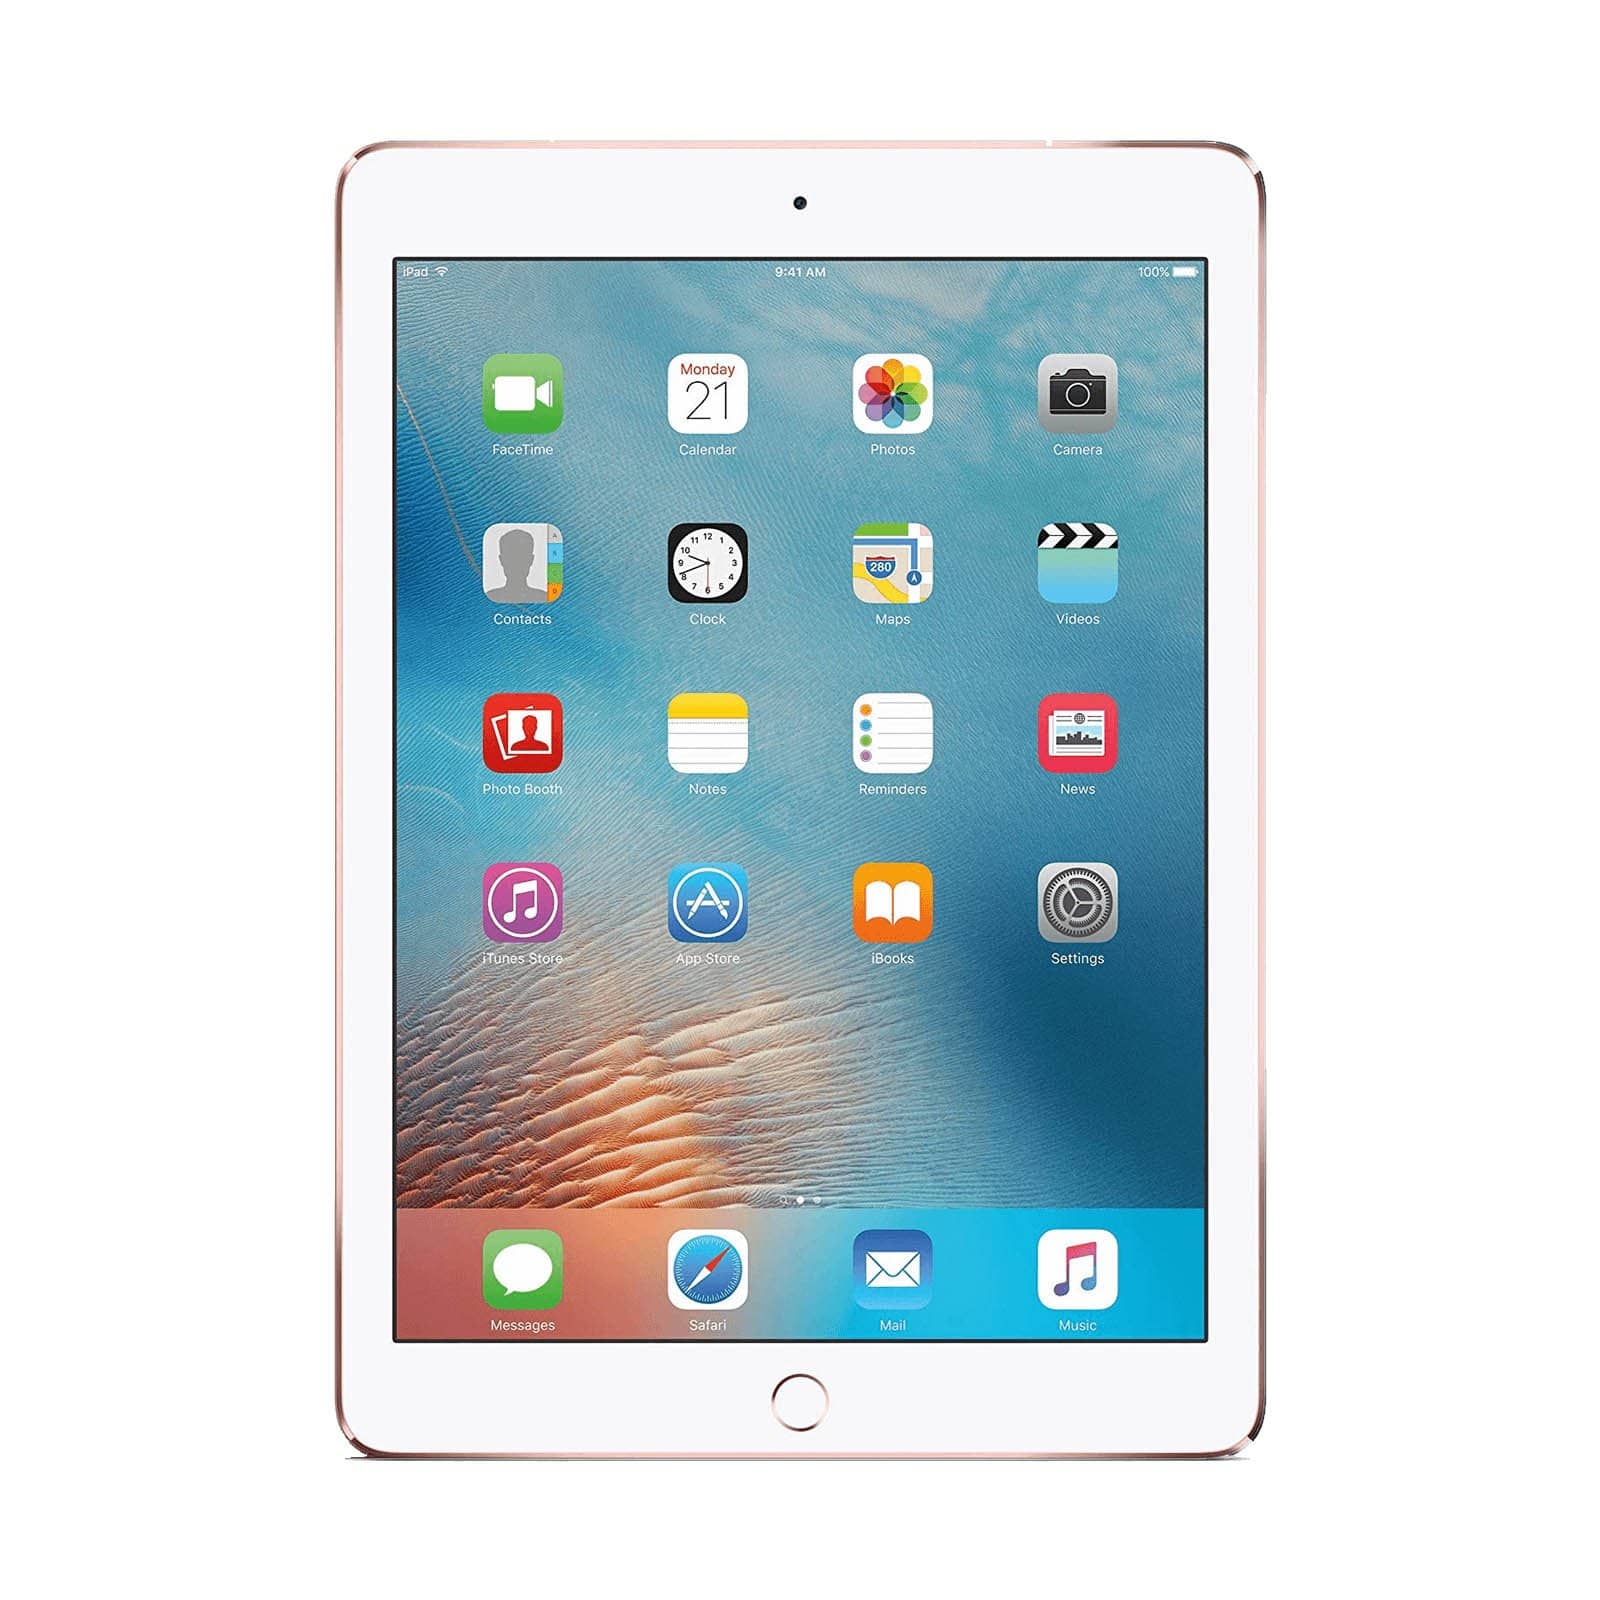 iPad Pro 9.7 Inch 256GB Rose Gold Very Good - WiFi